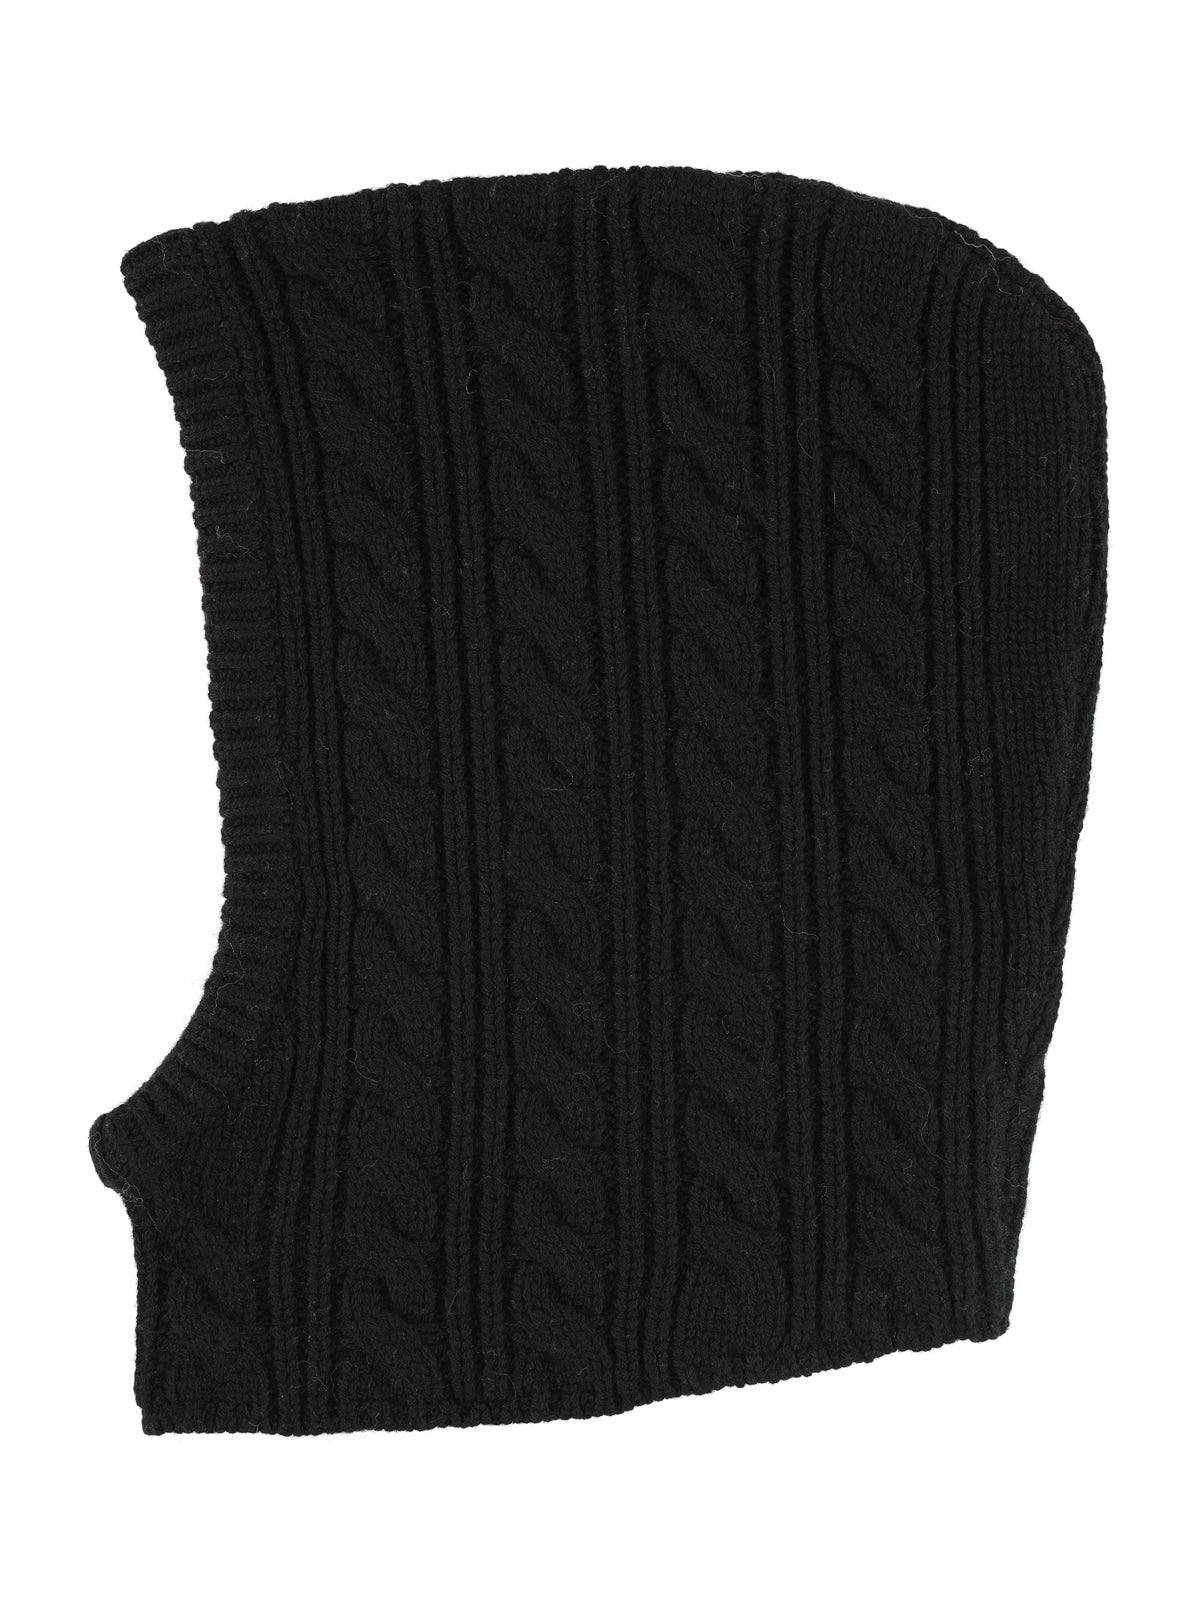 balaclava cap cashmere wool mix mr mittens black